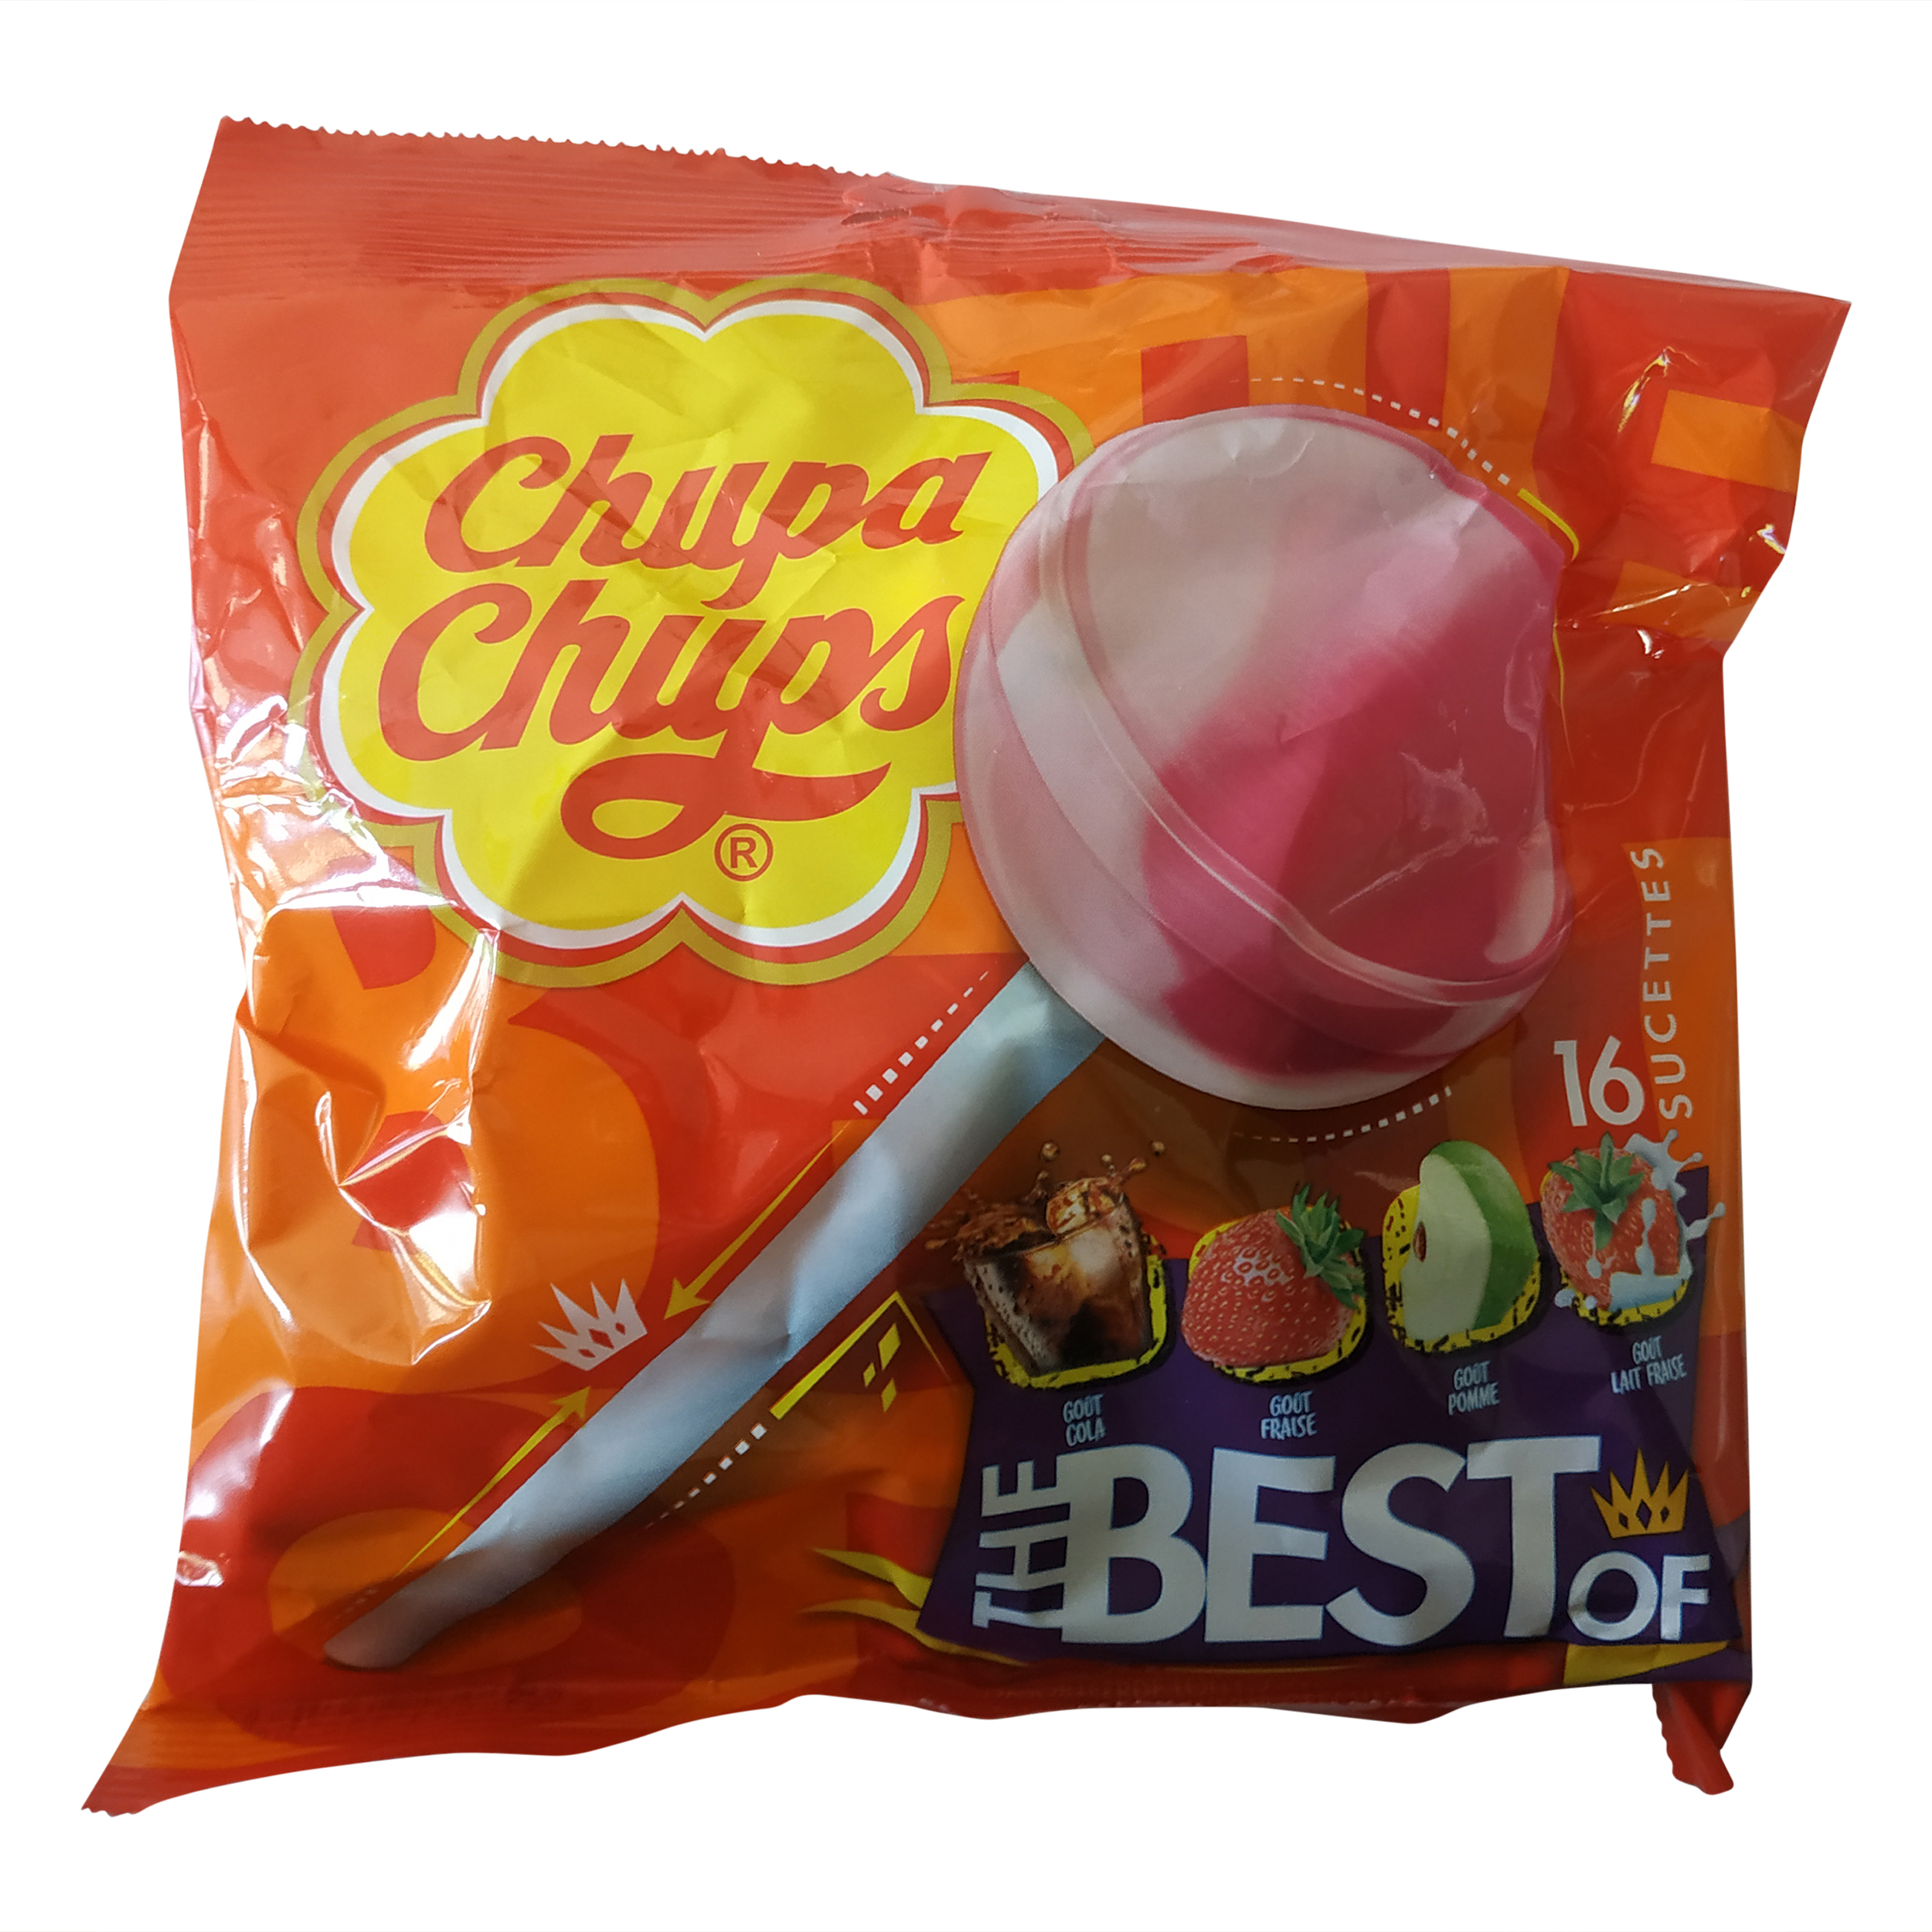 Candy chupa